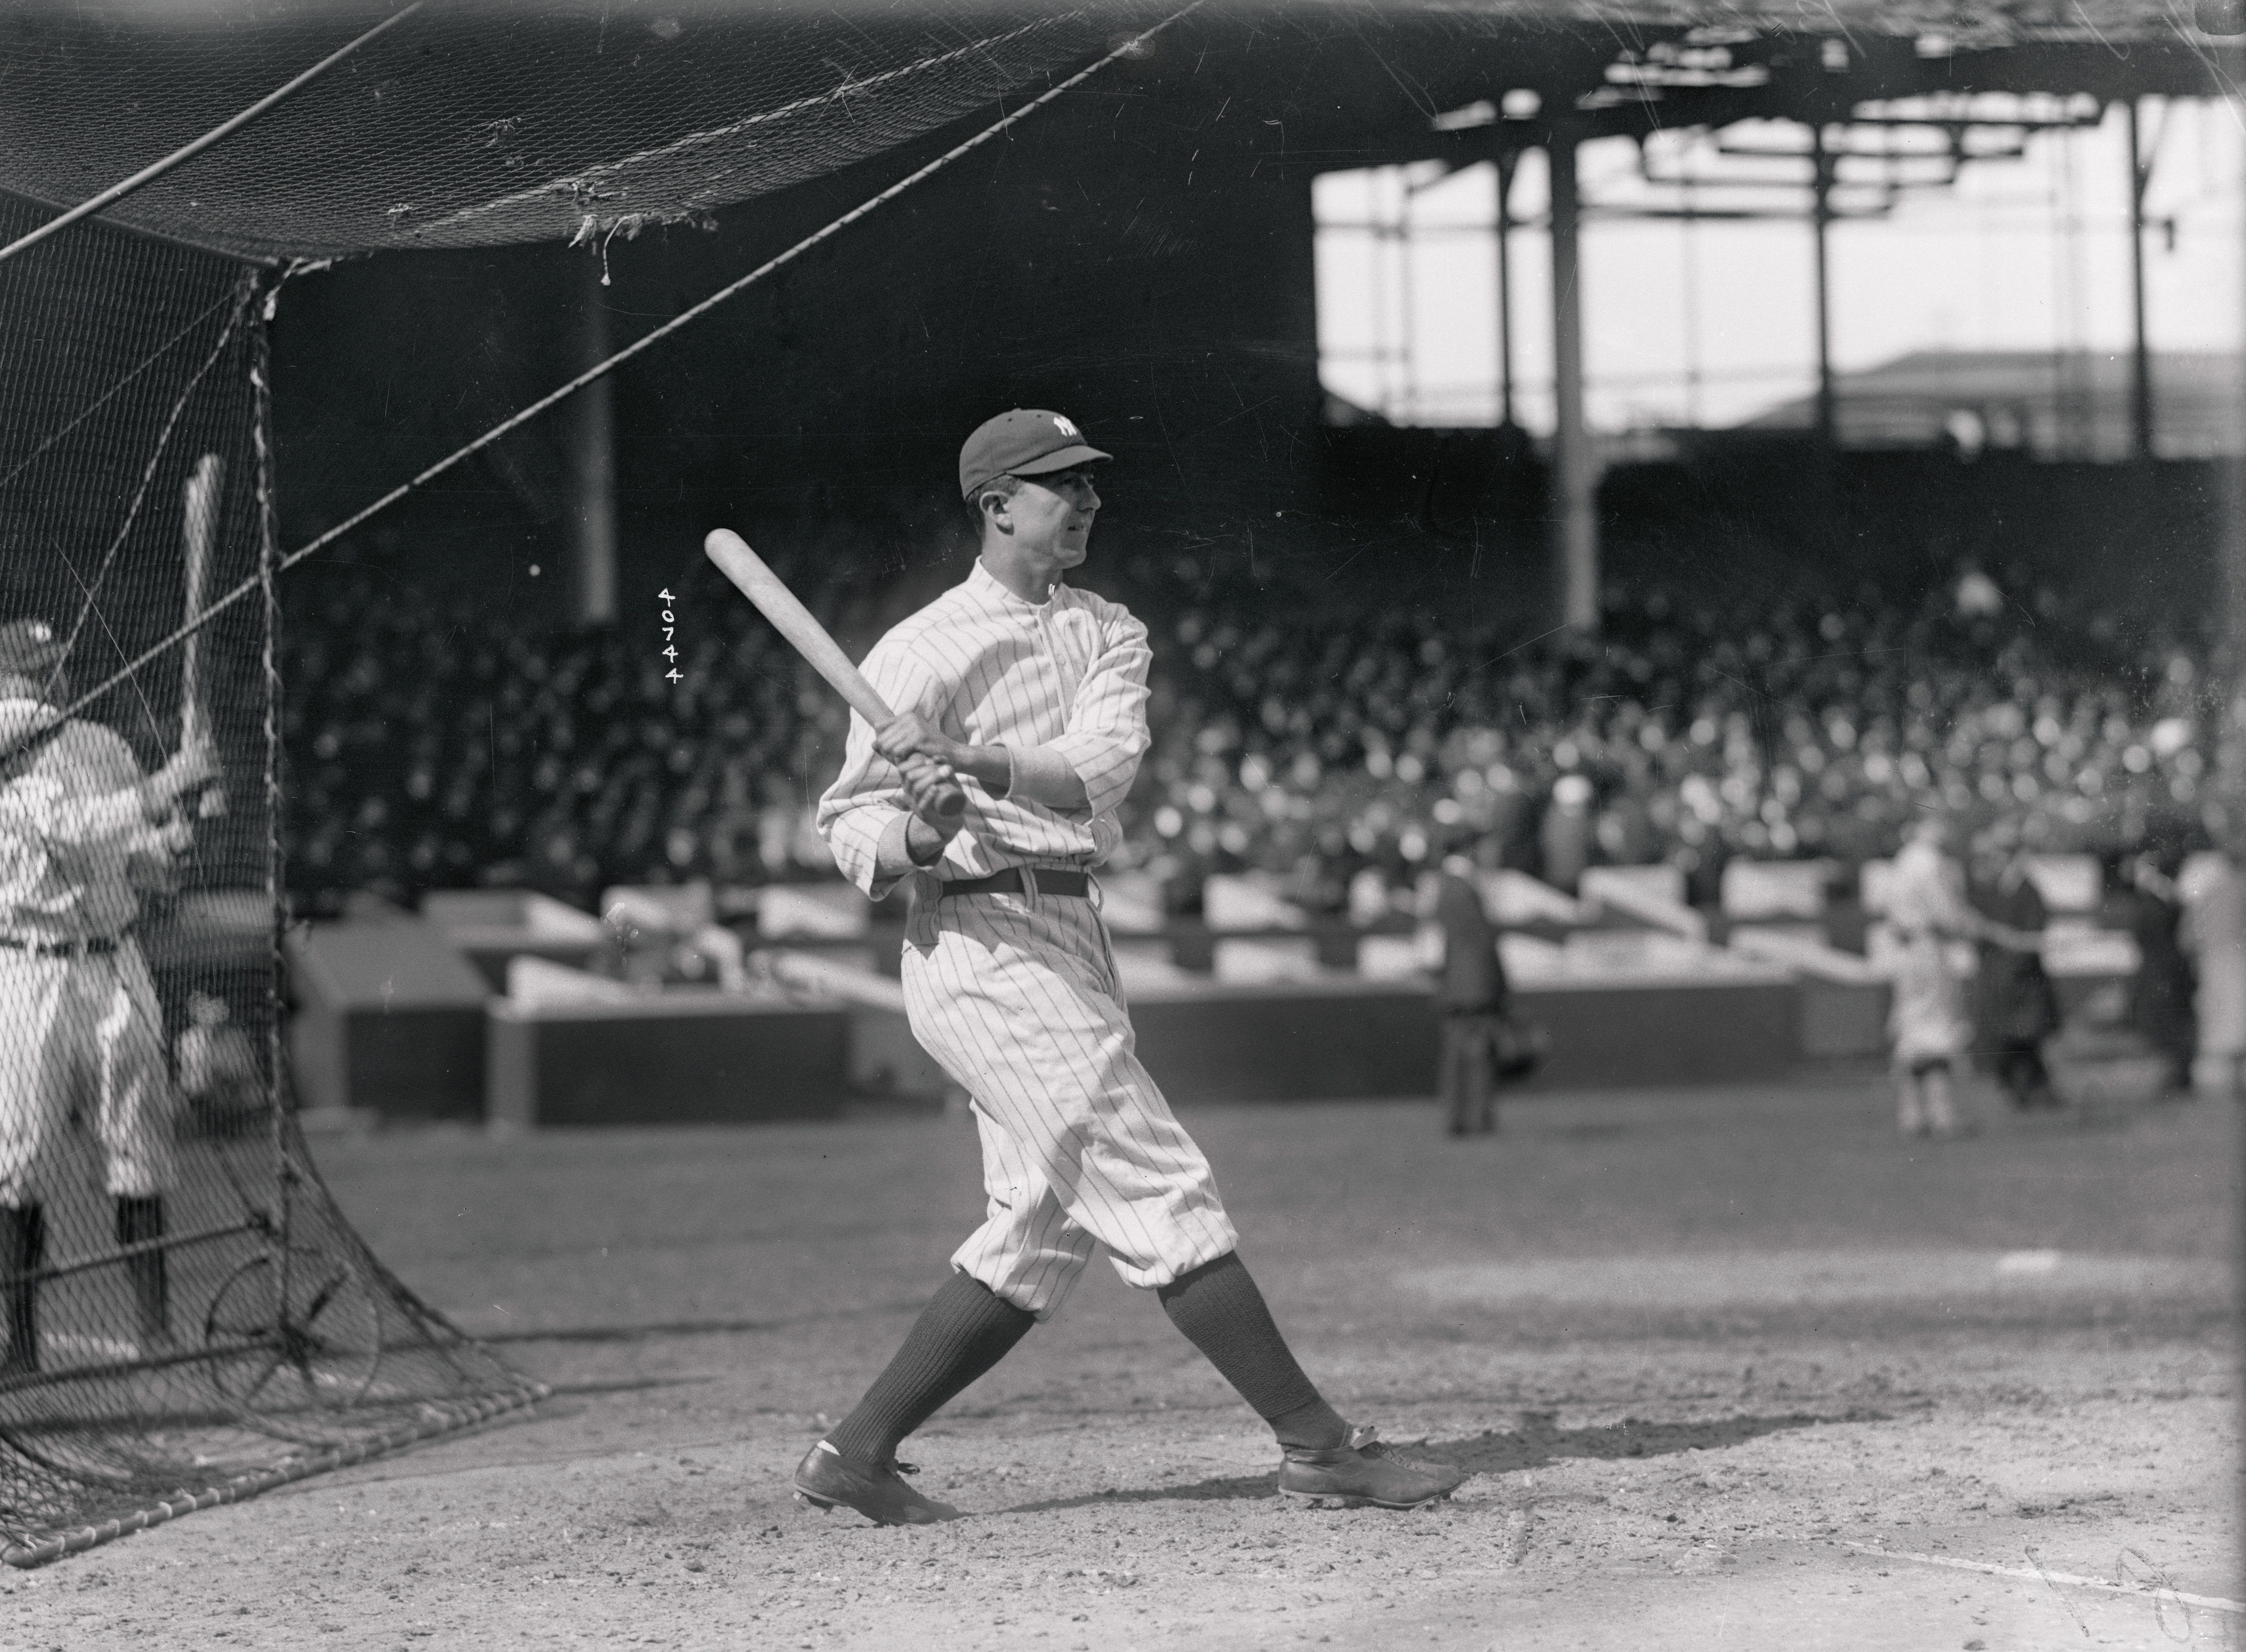 Frank “Home Run” Baker of New York American Baseball Team at Bat